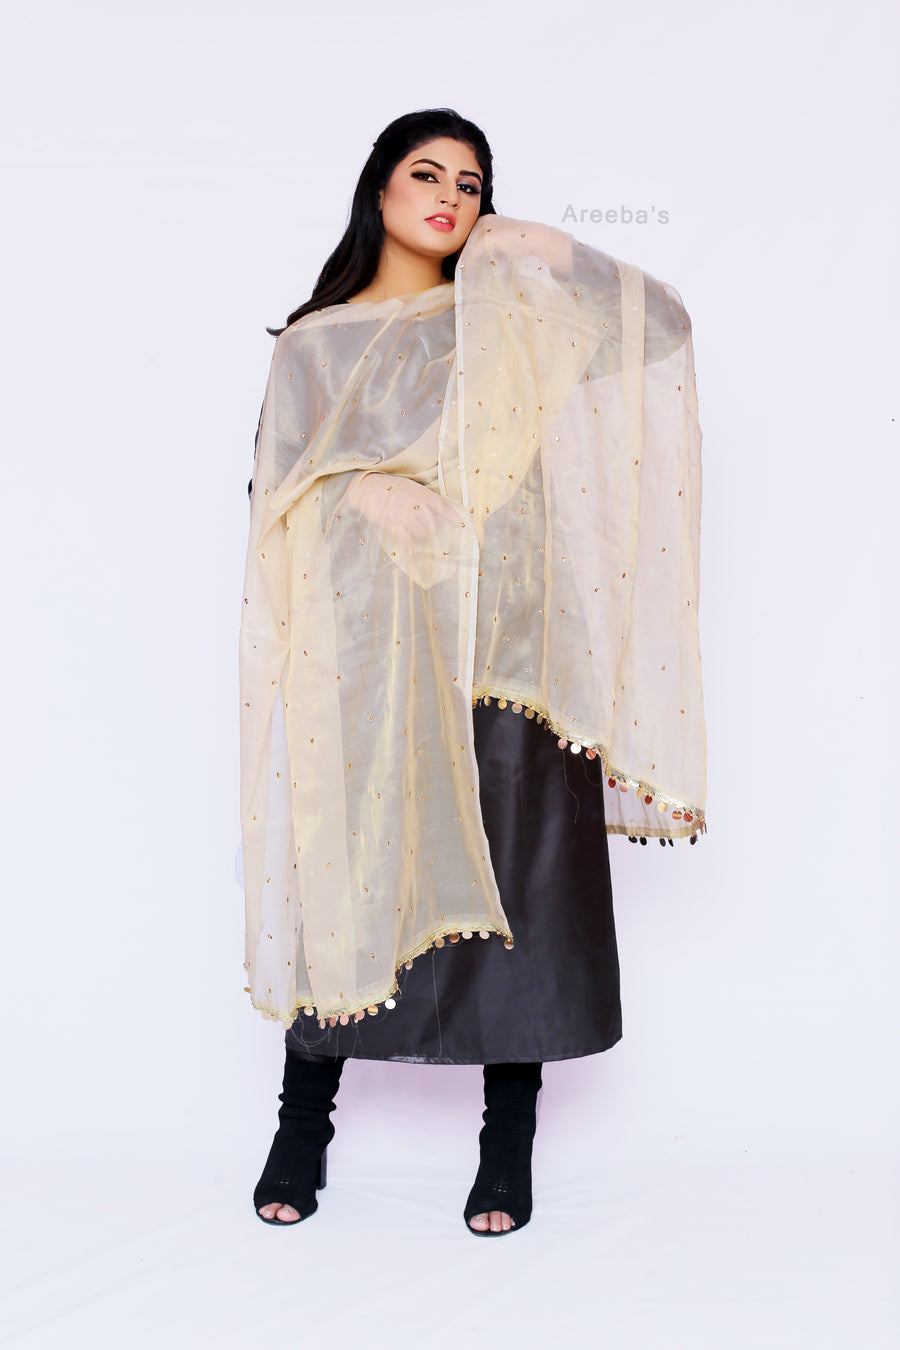 Bone embellished- Areeba's Couture